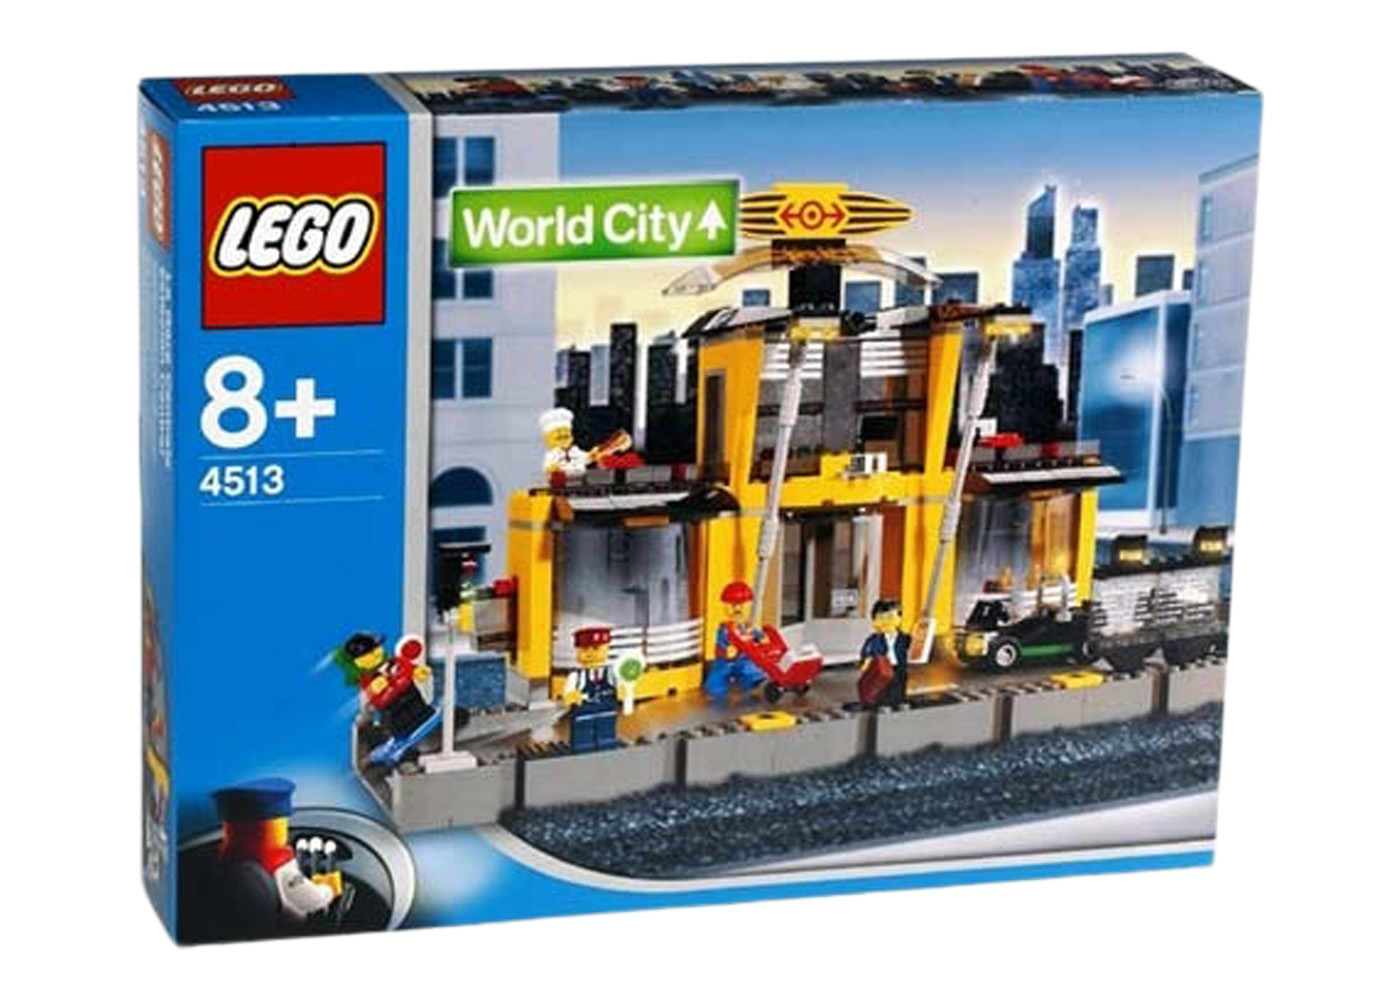 LEGO World City Grand Central Station Set 4513